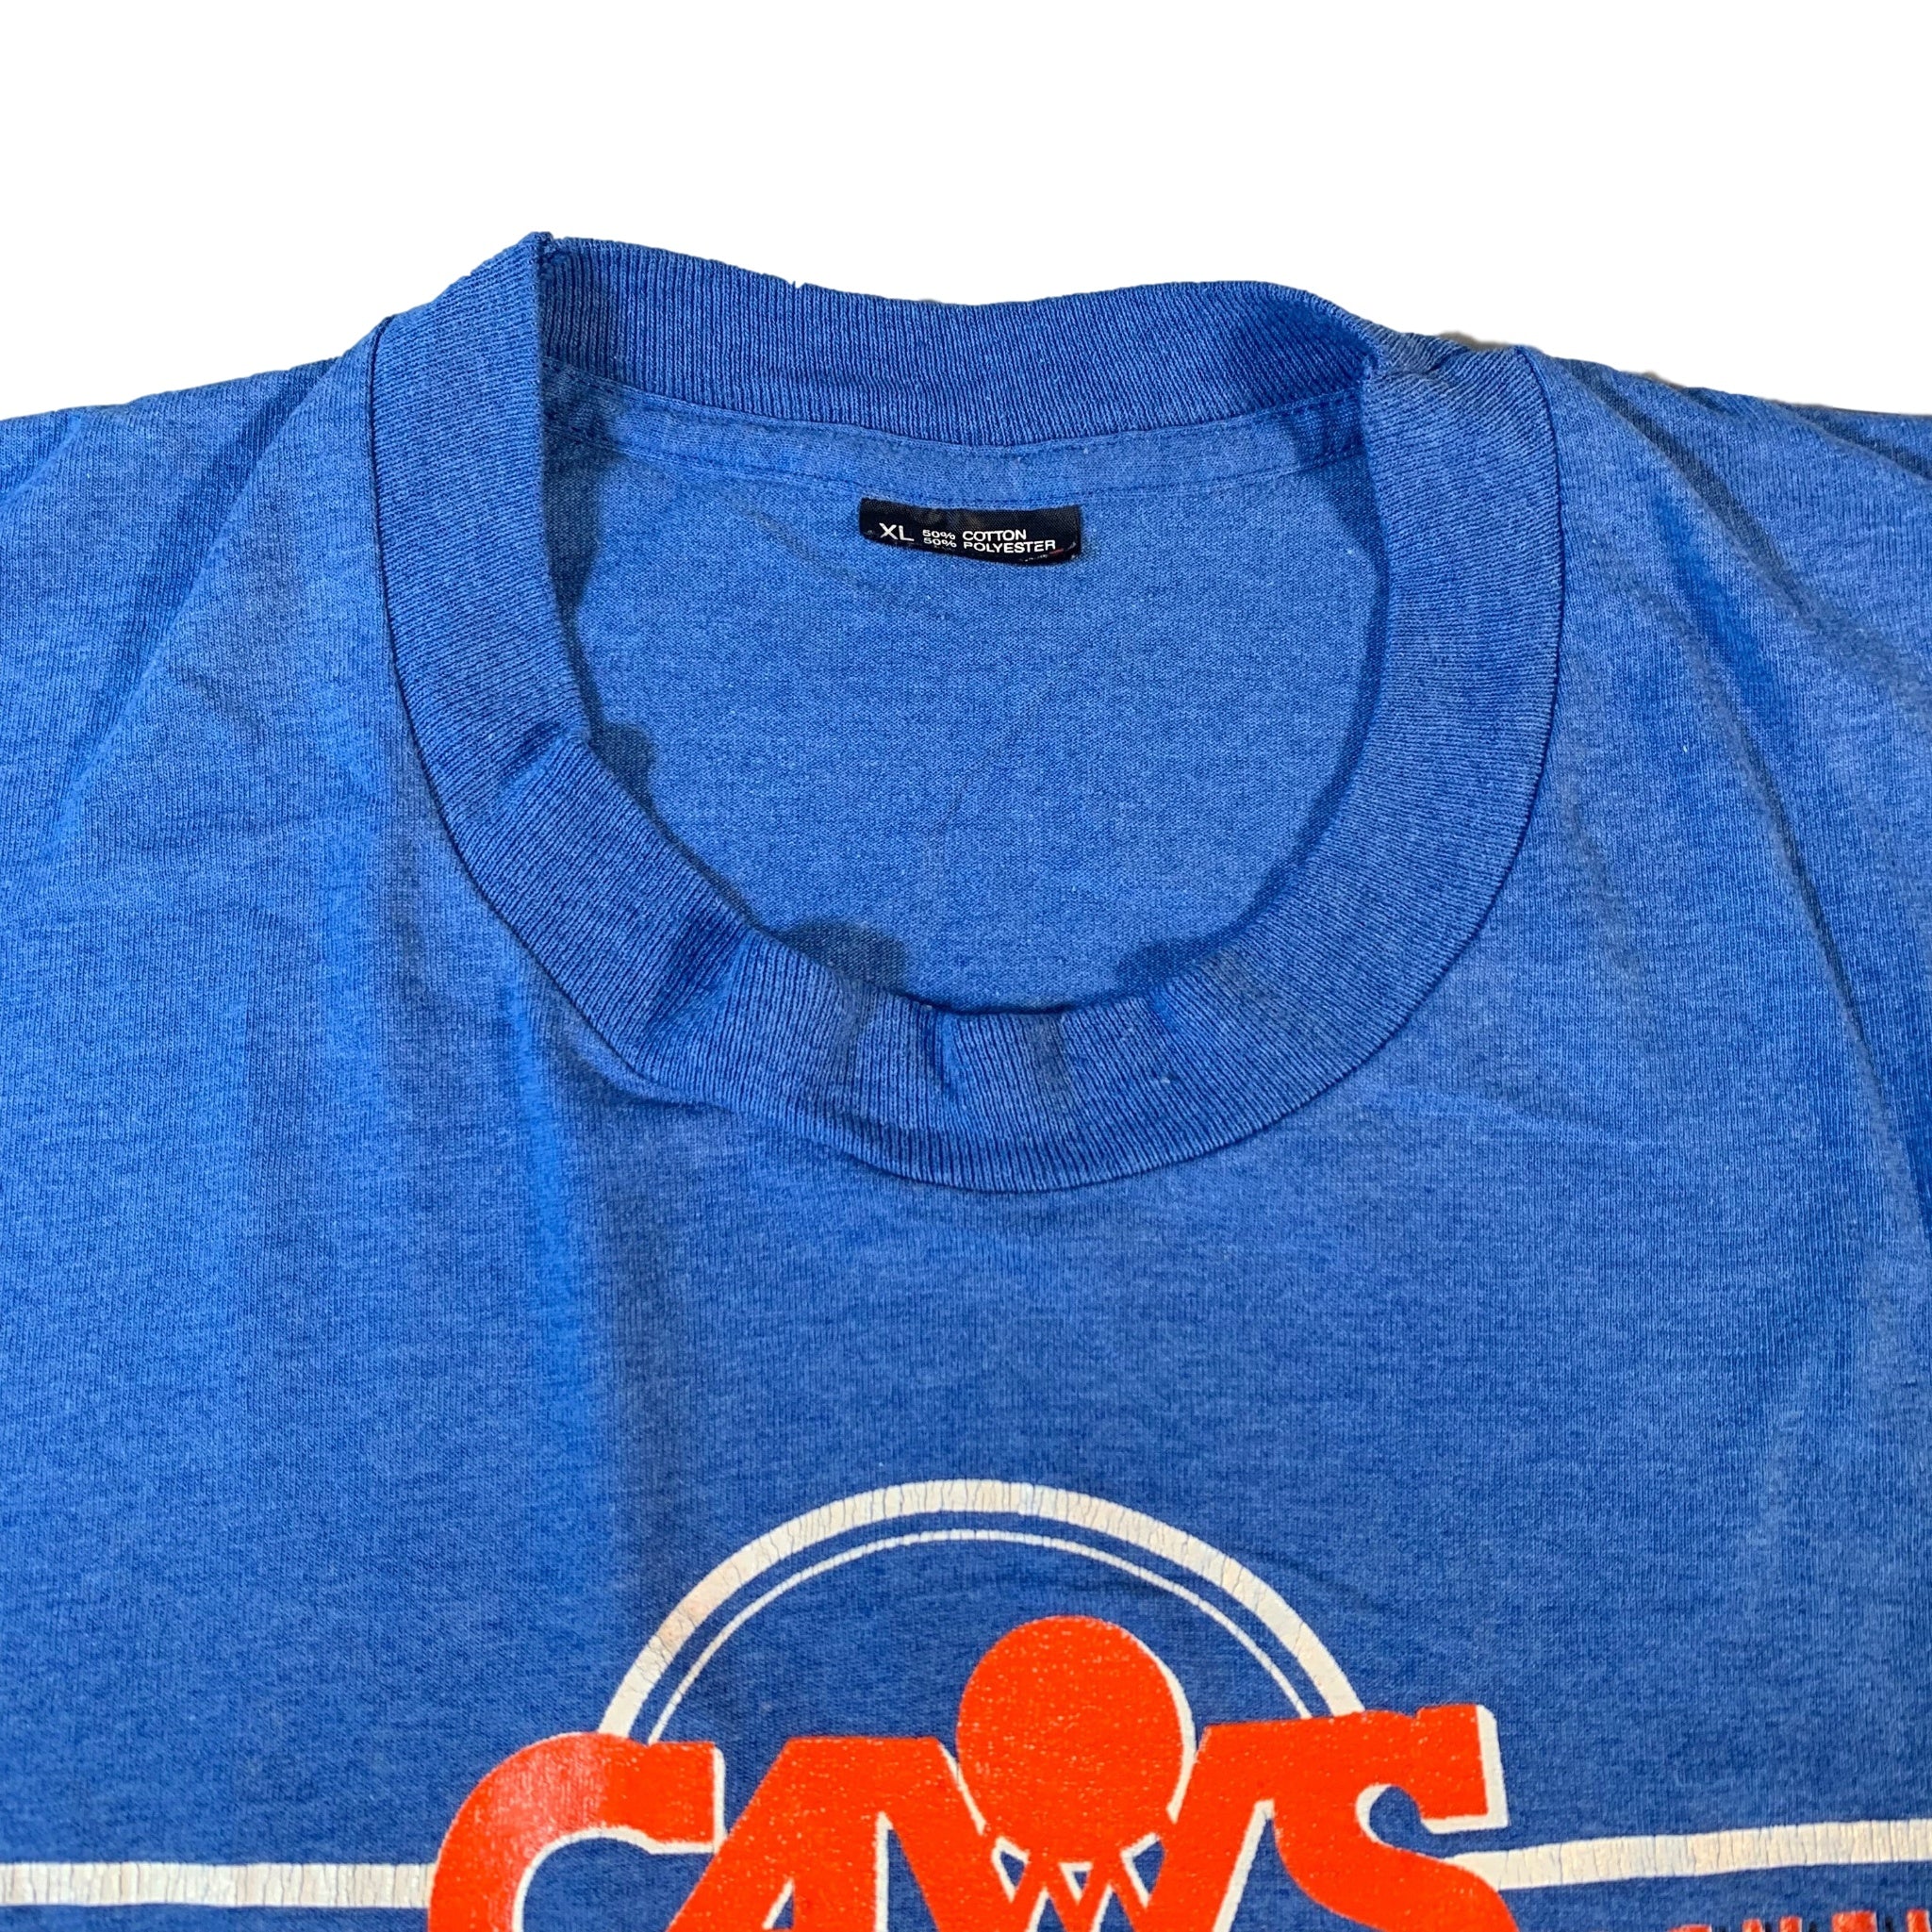 Vintage NBA (Artex) - Cleveland Cavs Crew Neck Sweatshirt 1990s